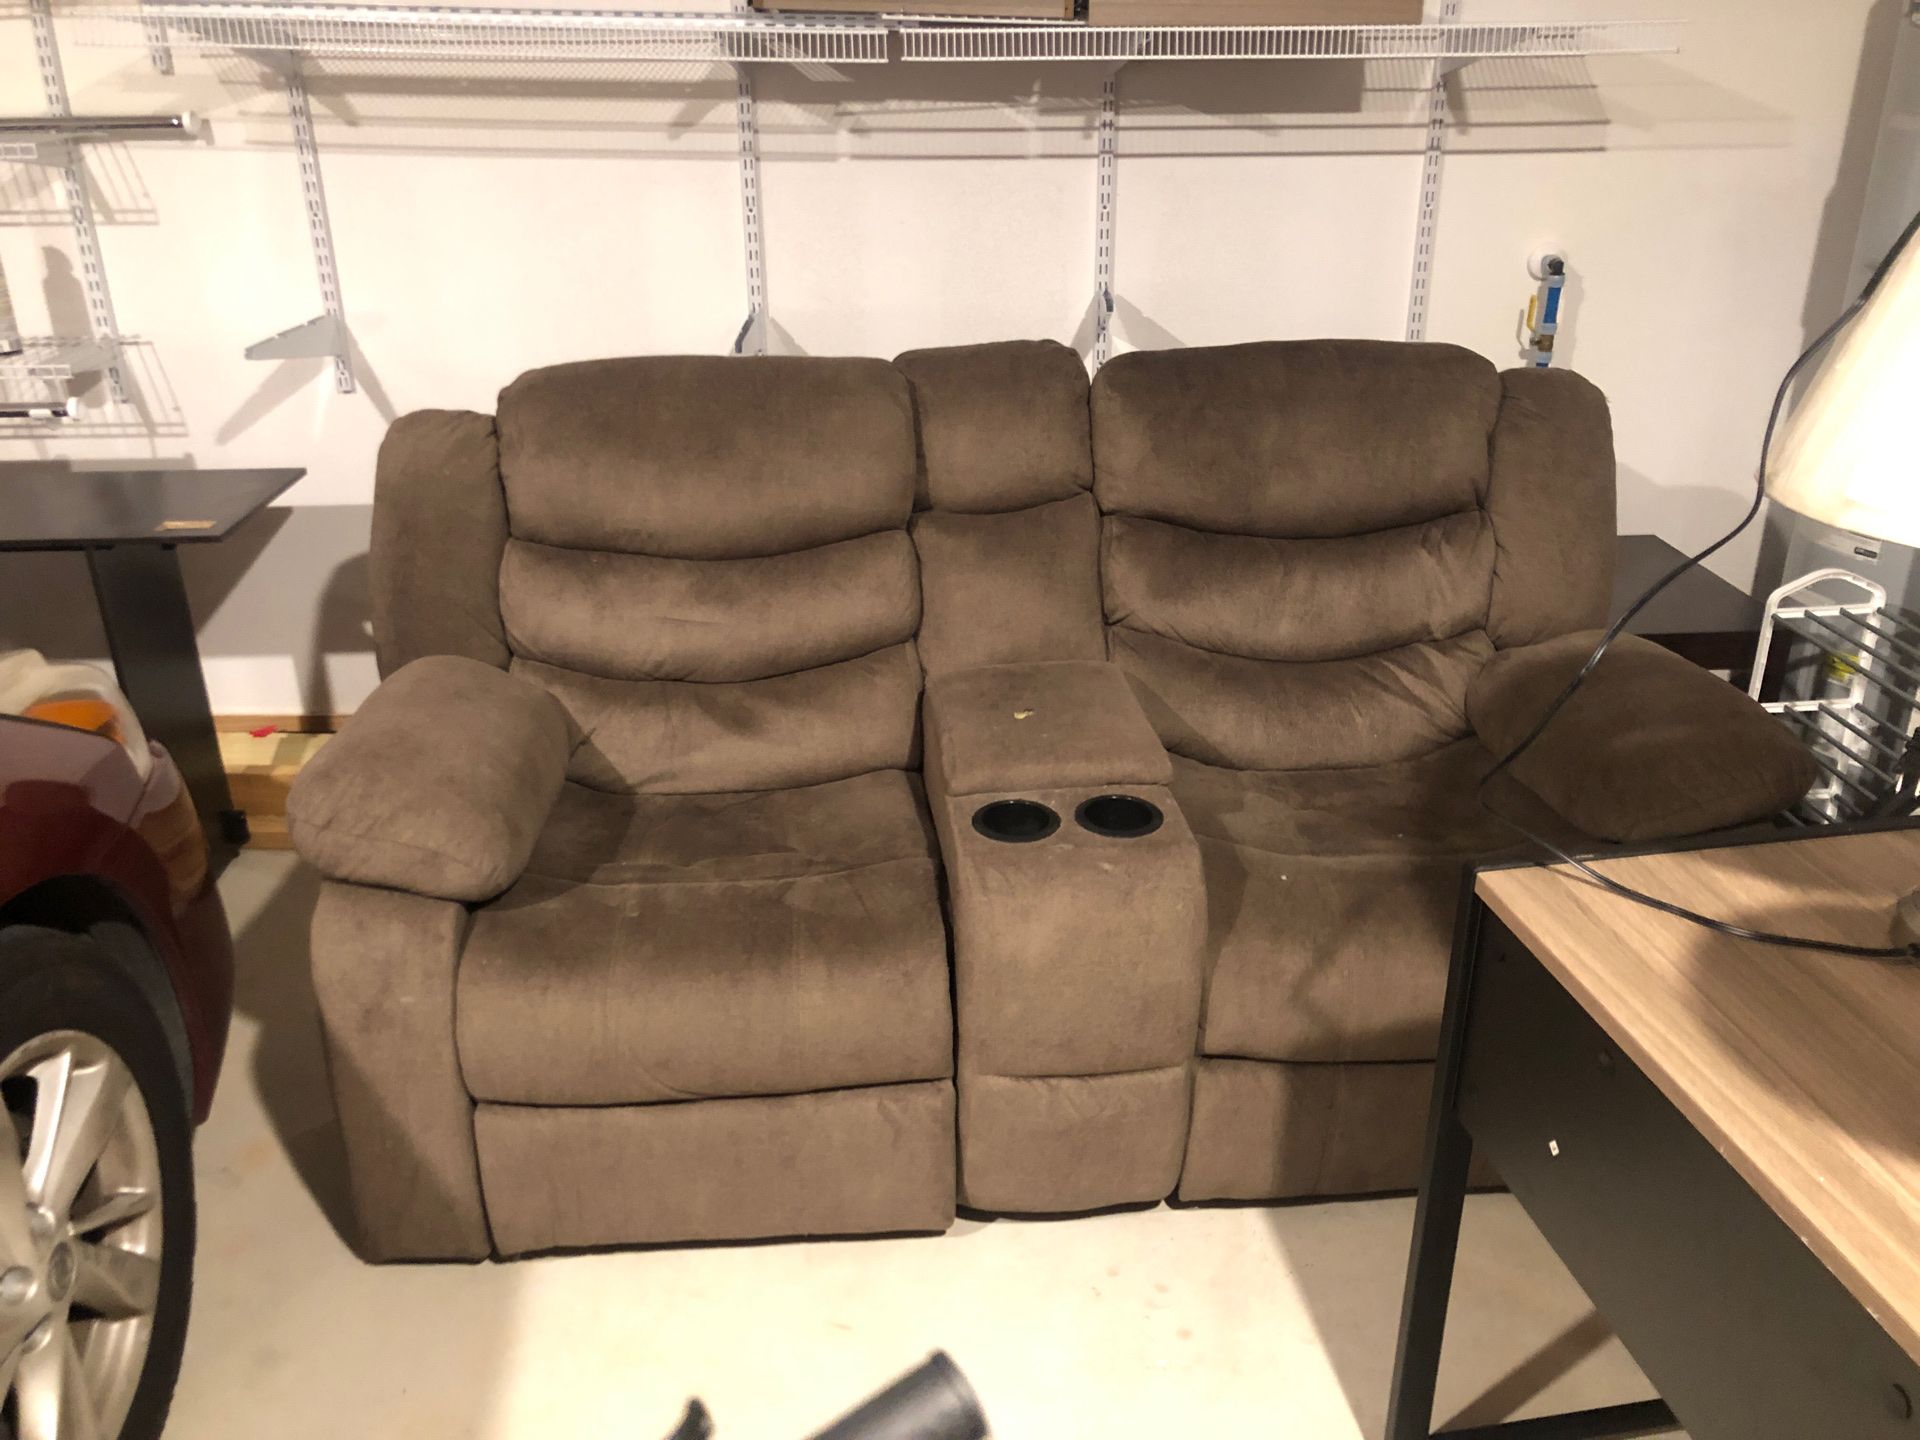 2 sofa for sale